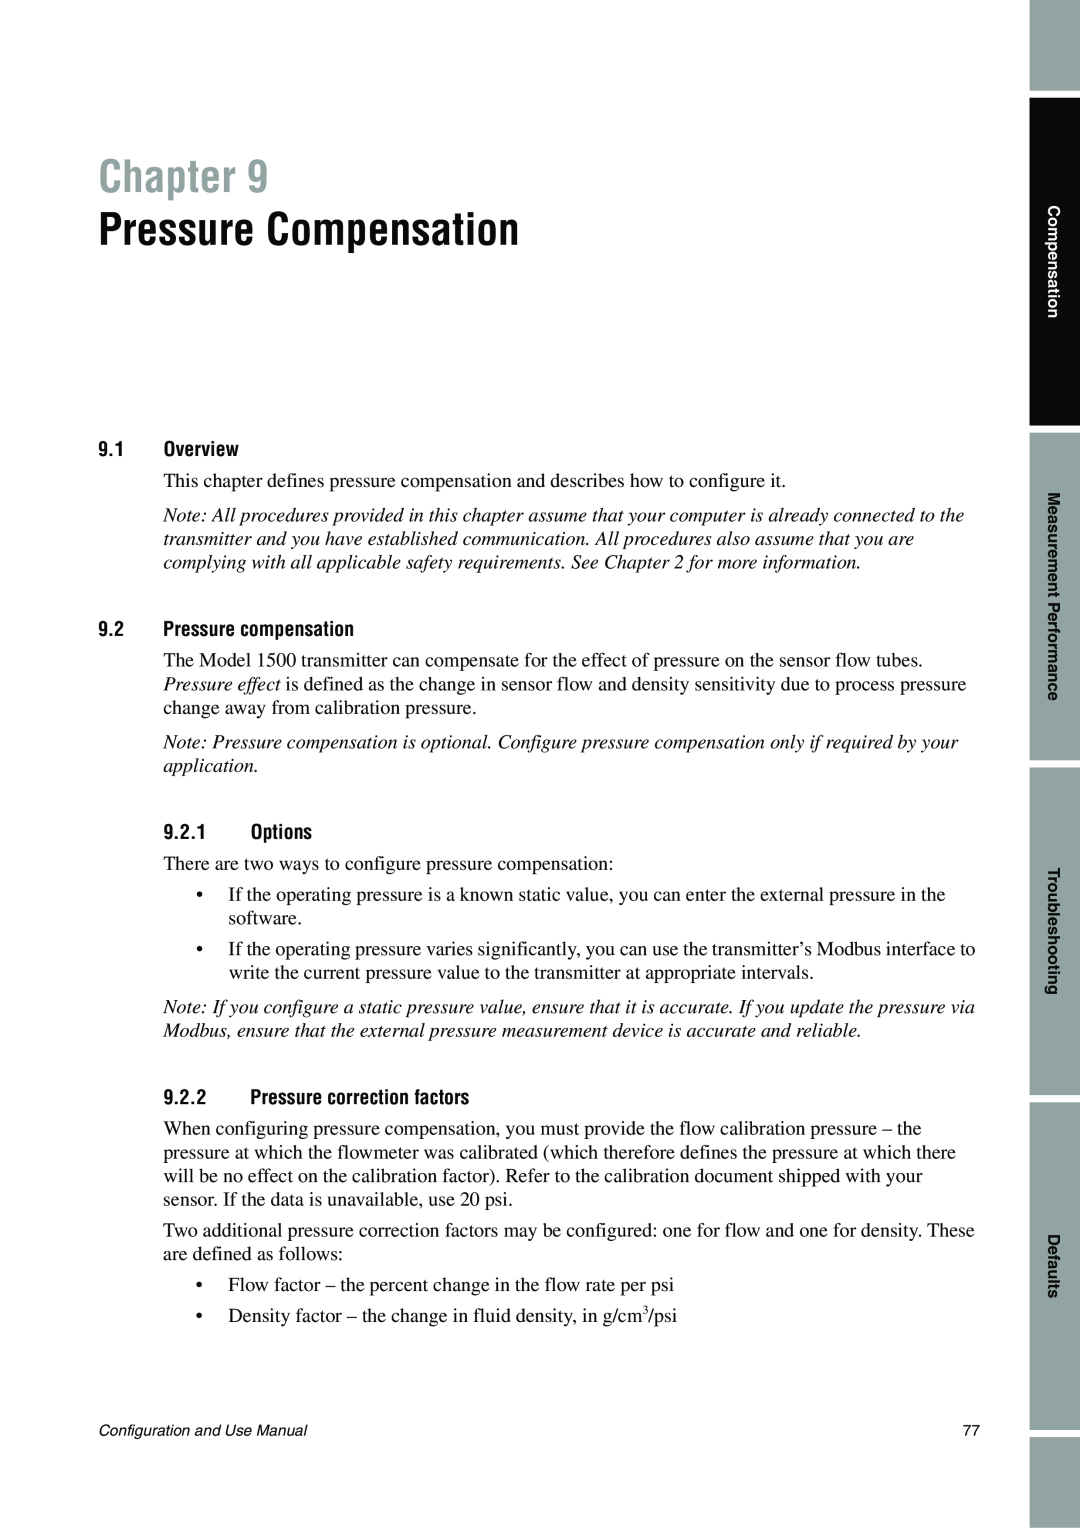 Emerson Process Management 1500 manual Pressure Compensation, Chapter, 9.1Overview, 9.2Pressure compensation, 9.2.1Options 